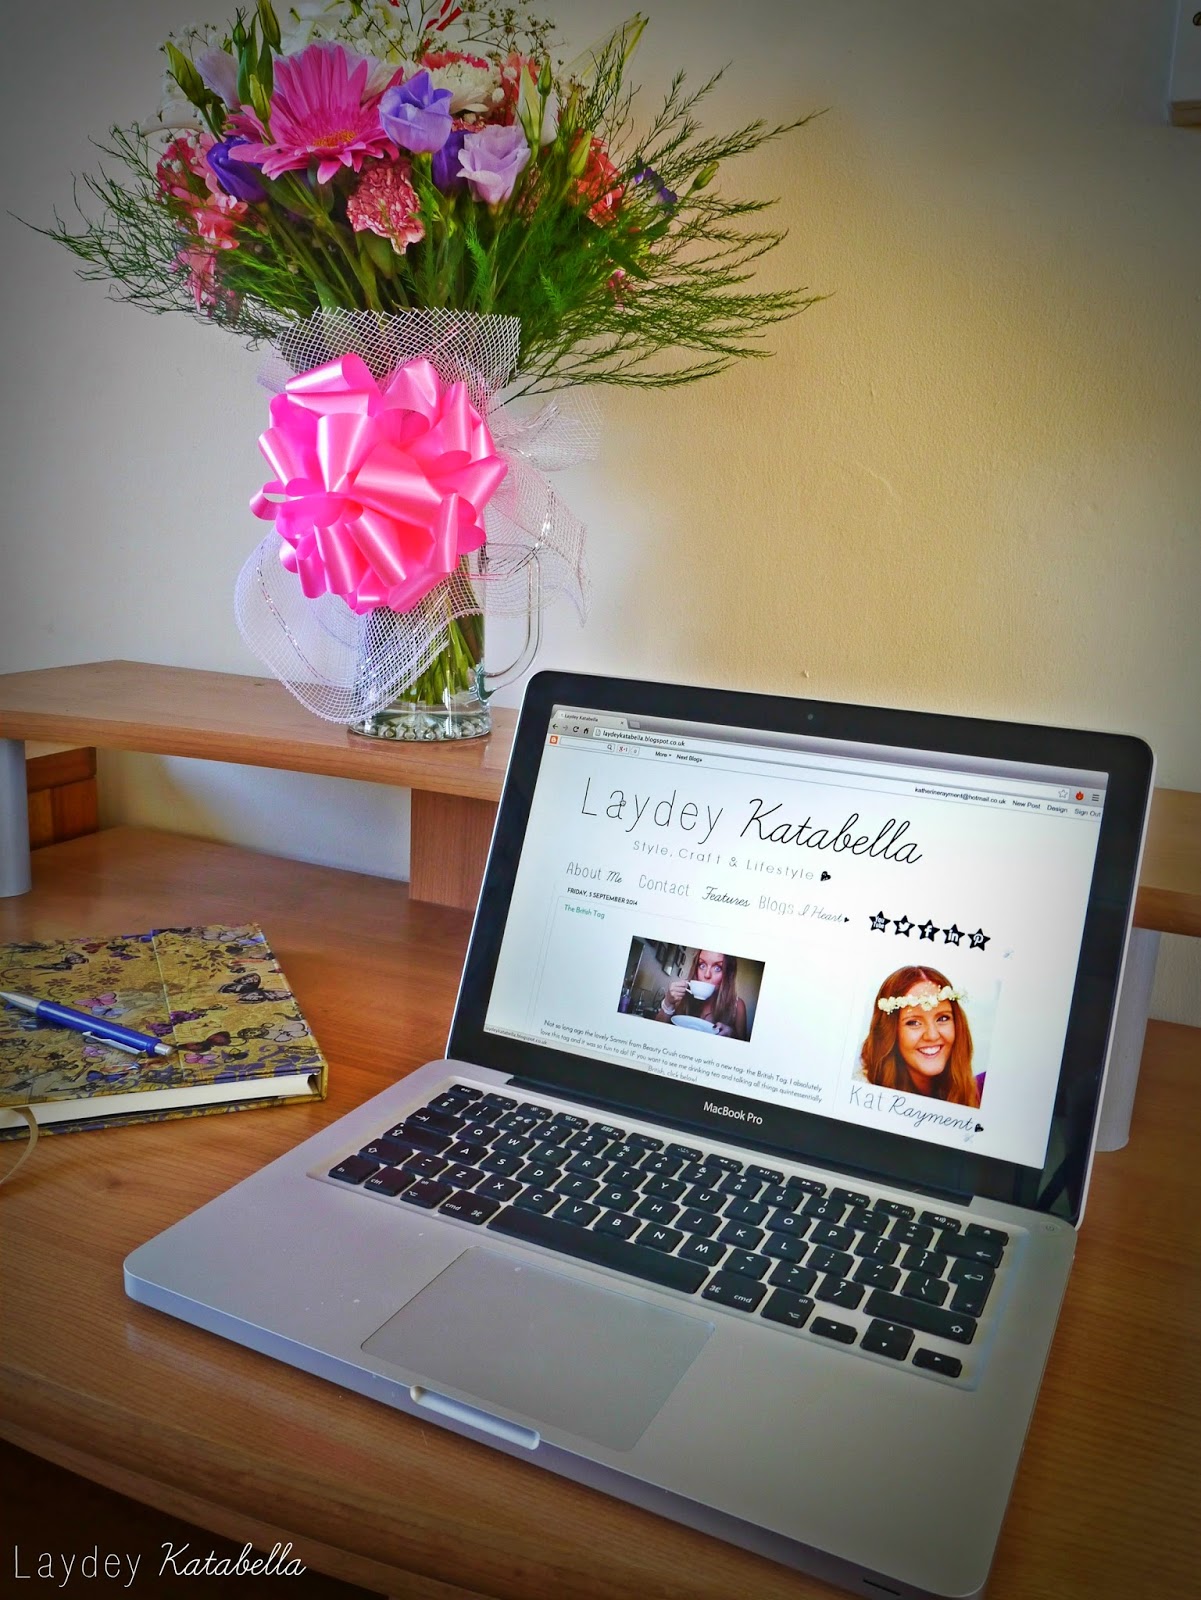 photo of mac laptop with laydey katabella blog